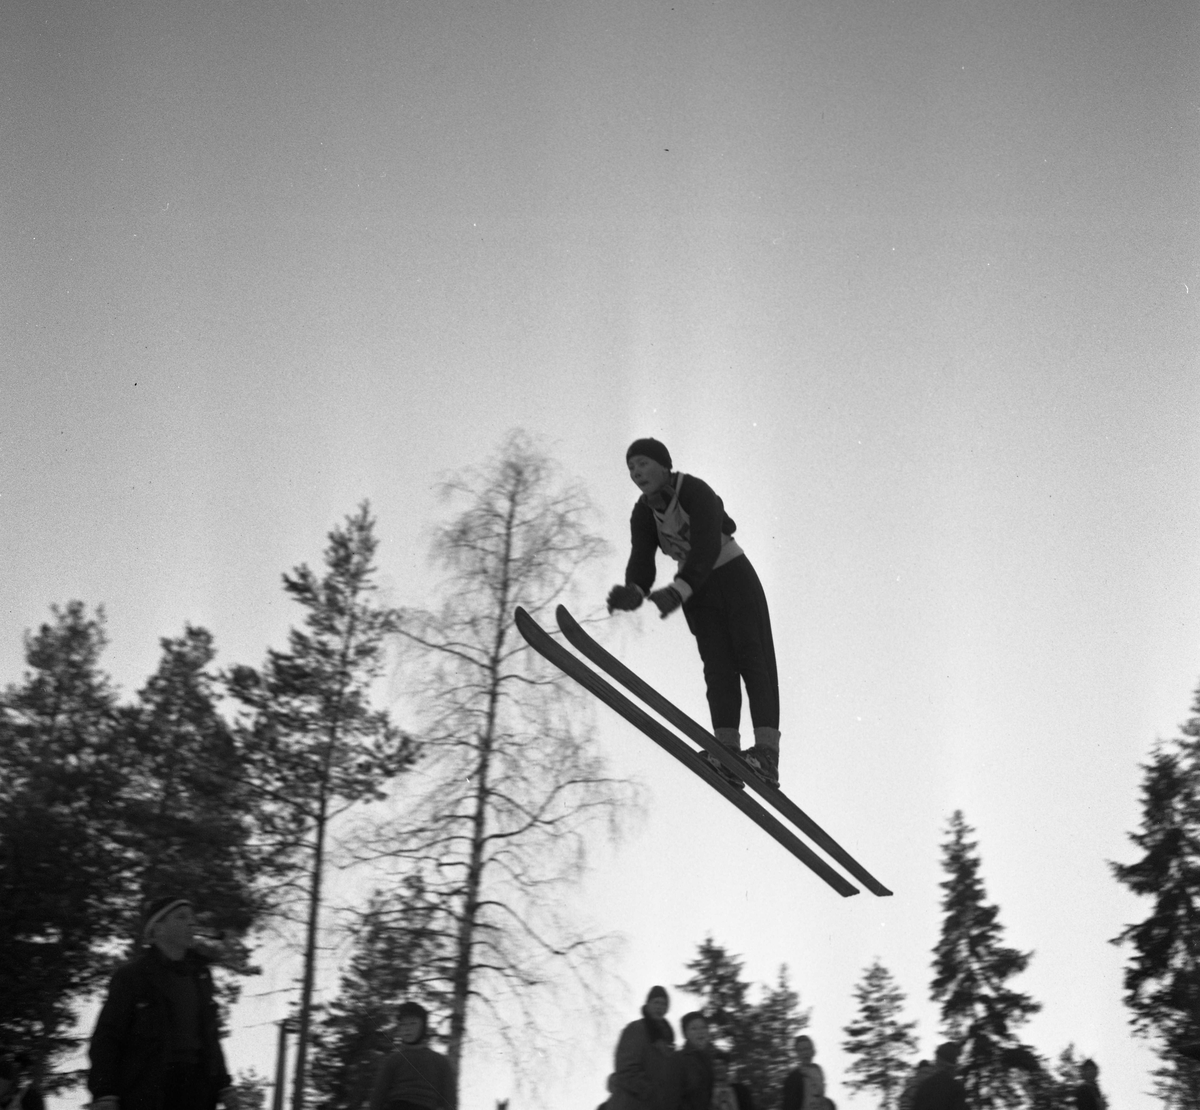 Ski jumping competiotin for young boys, Persløkka